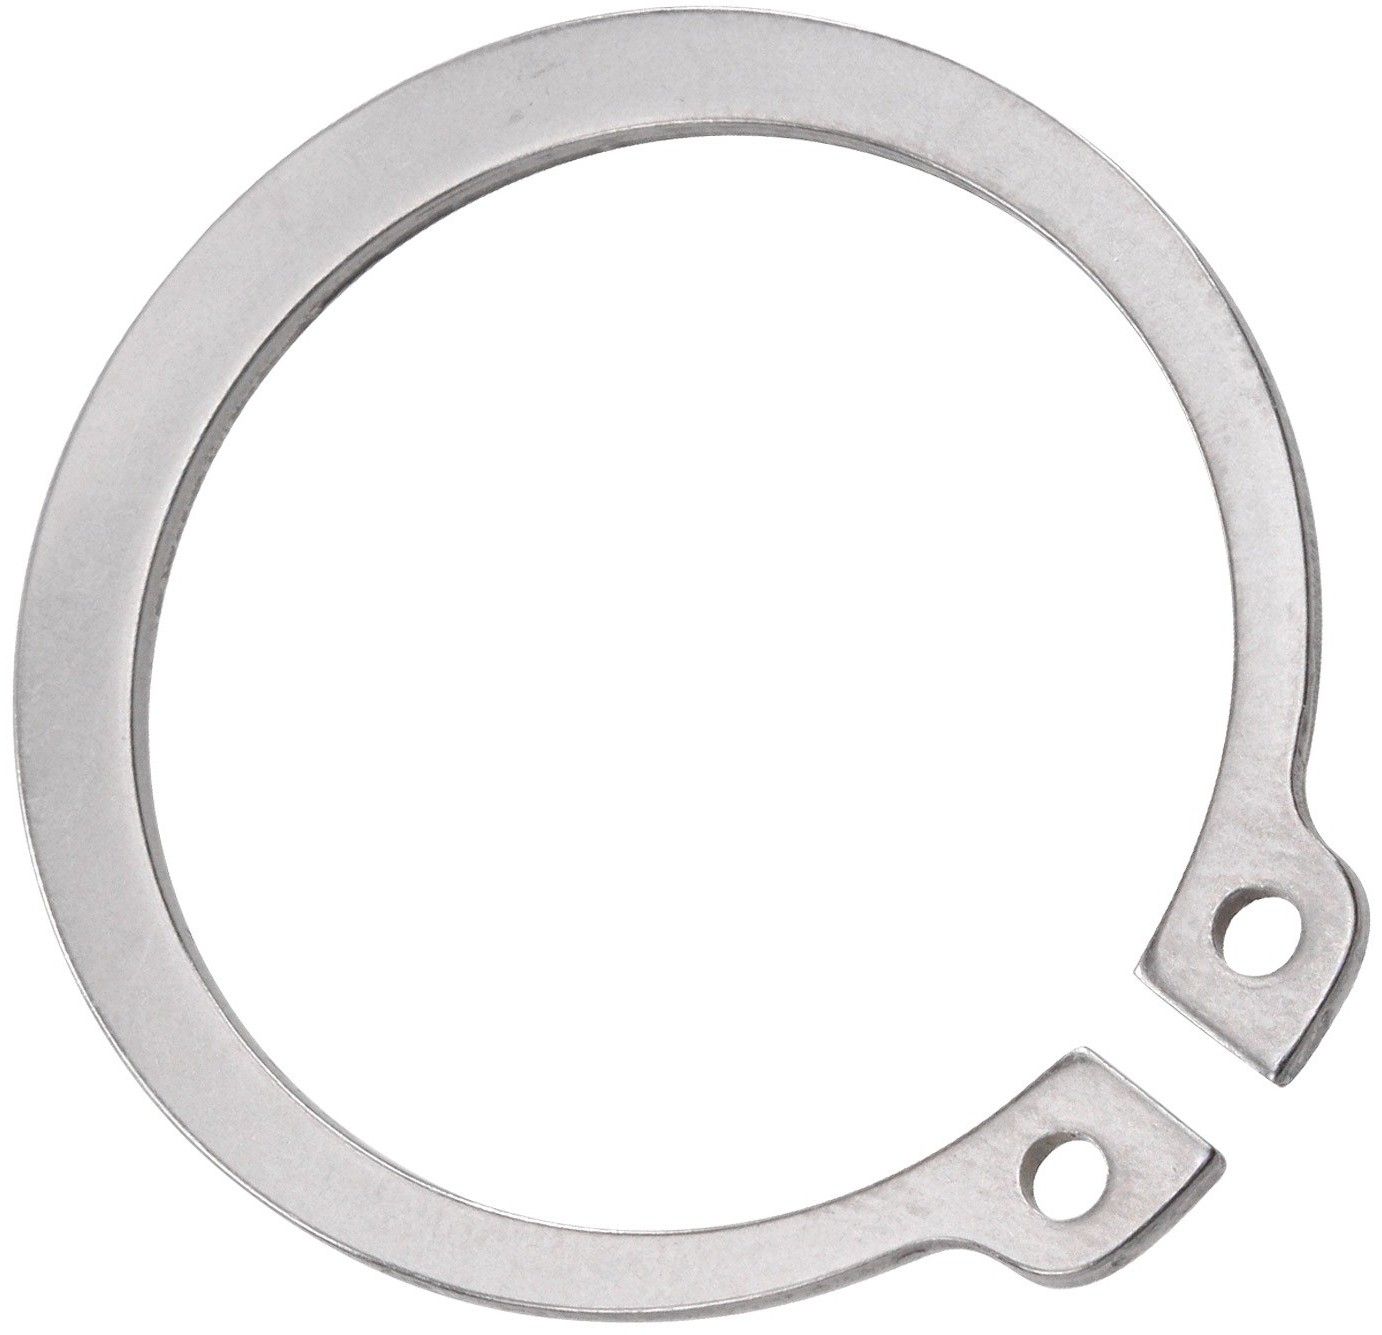 Кольцо стопорное наружное 82х2,5 DIN 471, нержавеющая сталь 1.4122 (А2) - фото